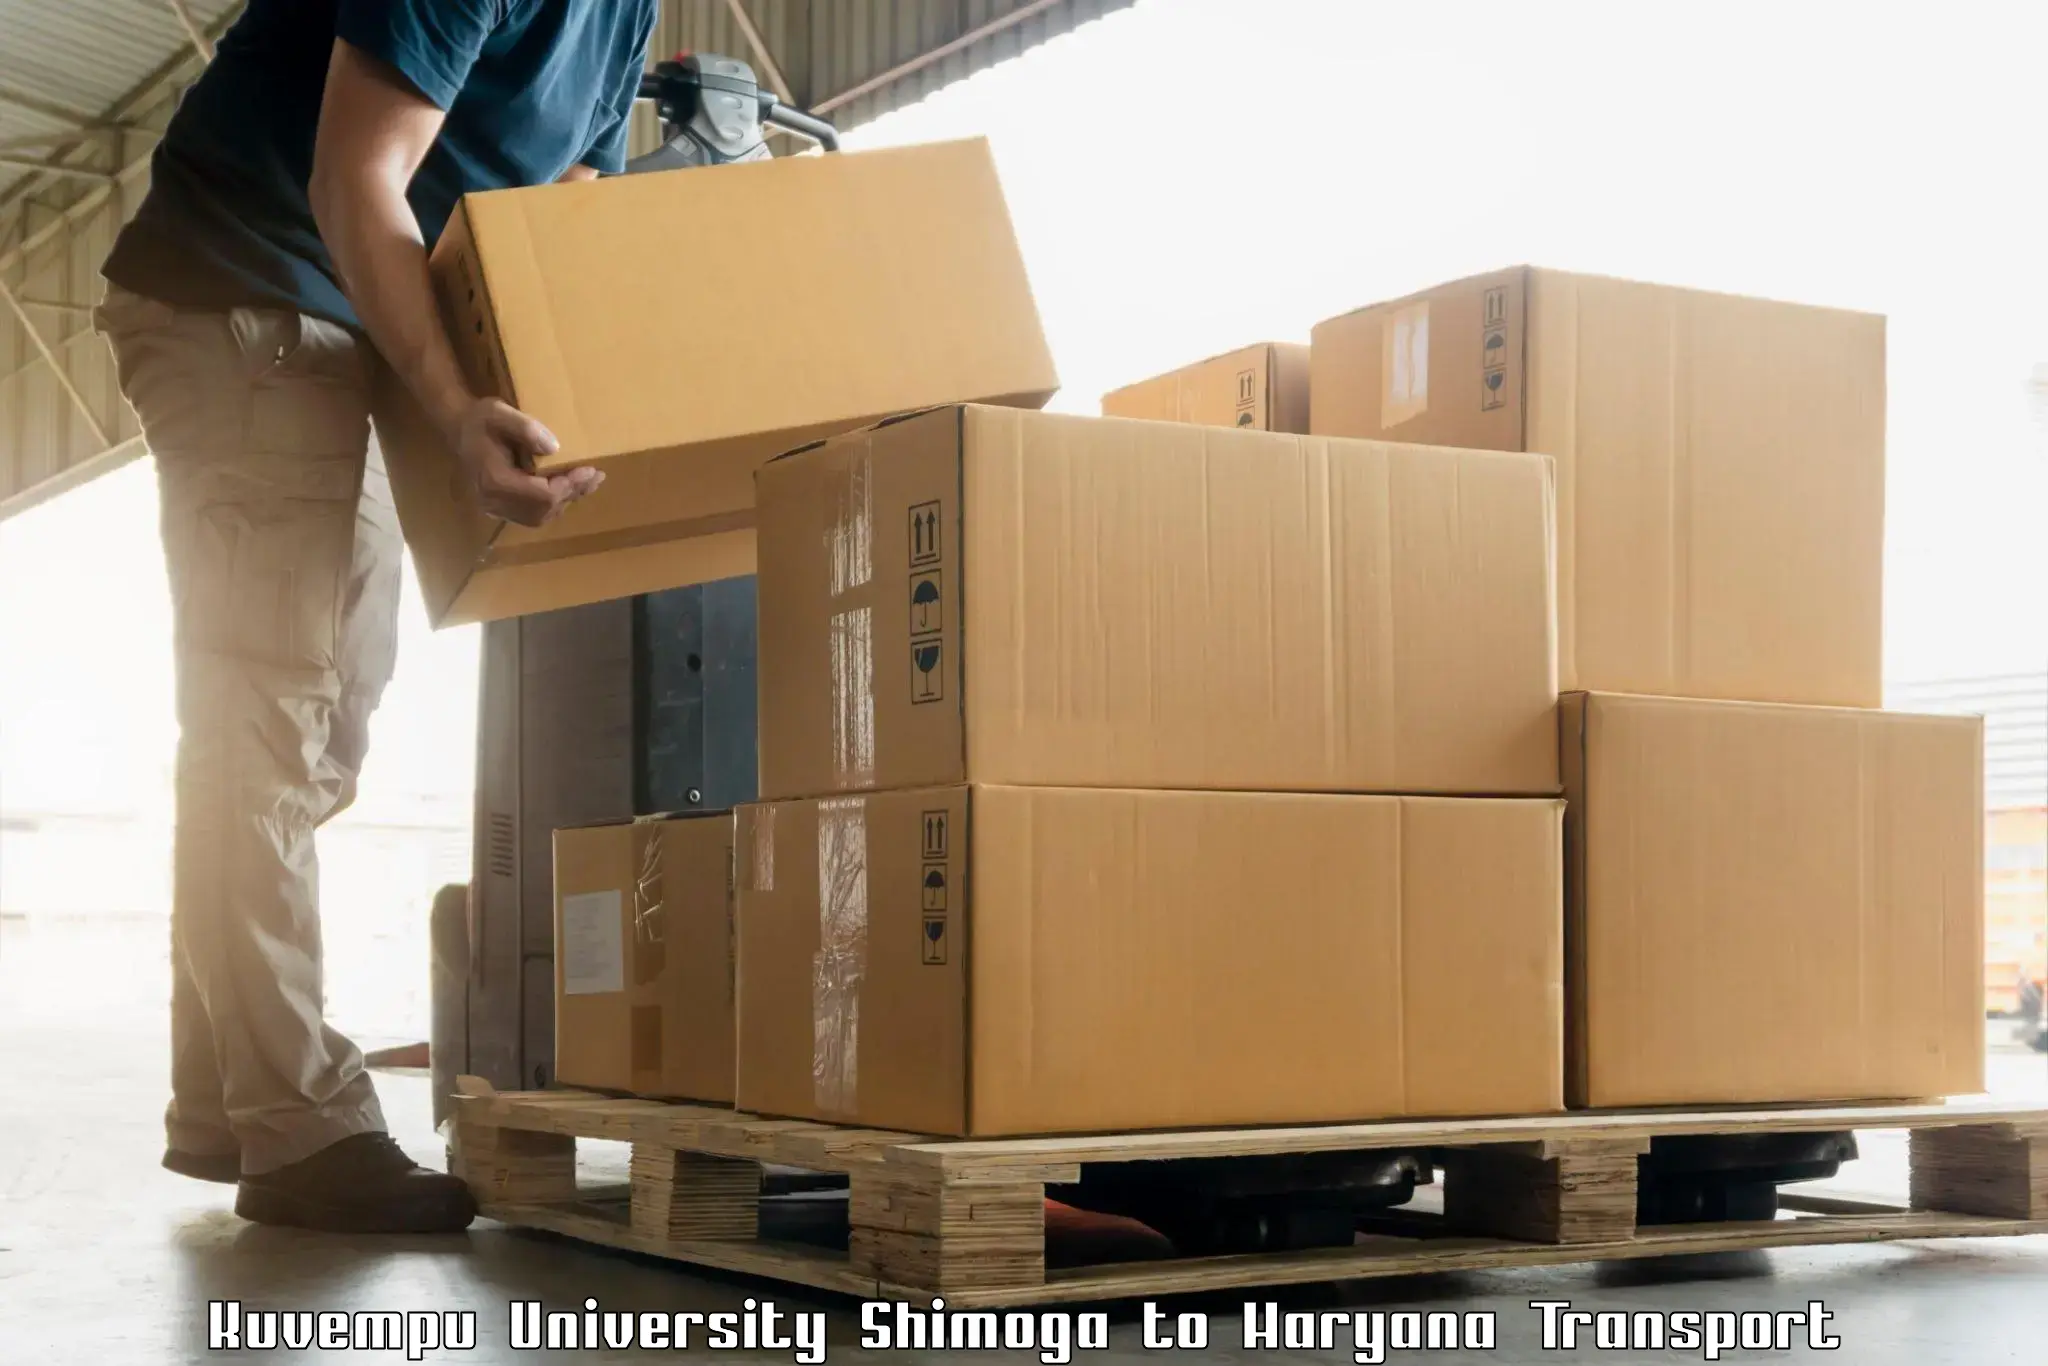 Transport in sharing Kuvempu University Shimoga to Hisar